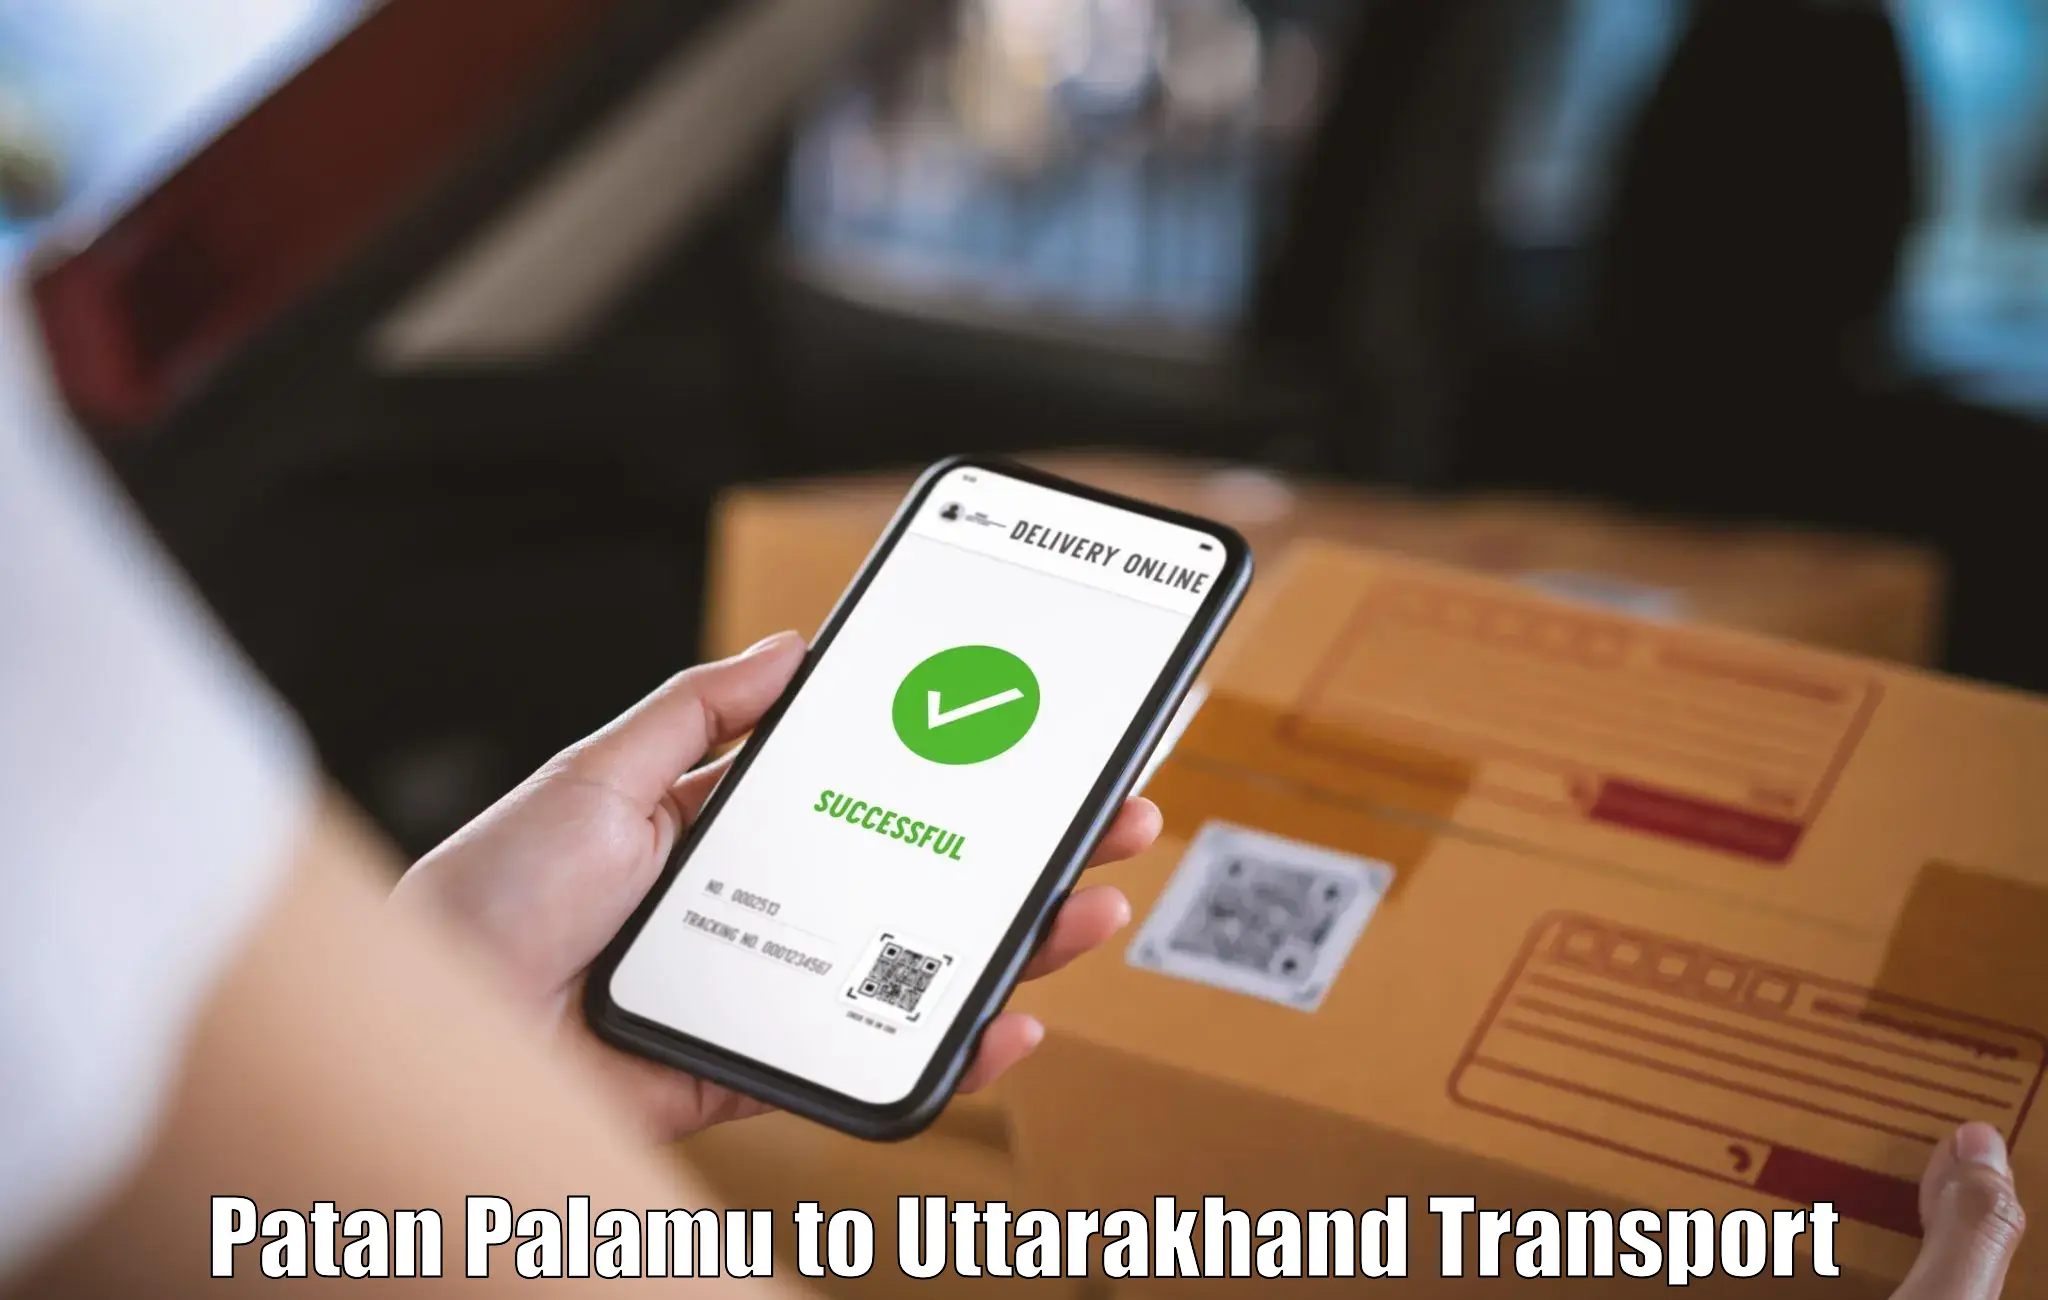 Transport in sharing Patan Palamu to Rudraprayag